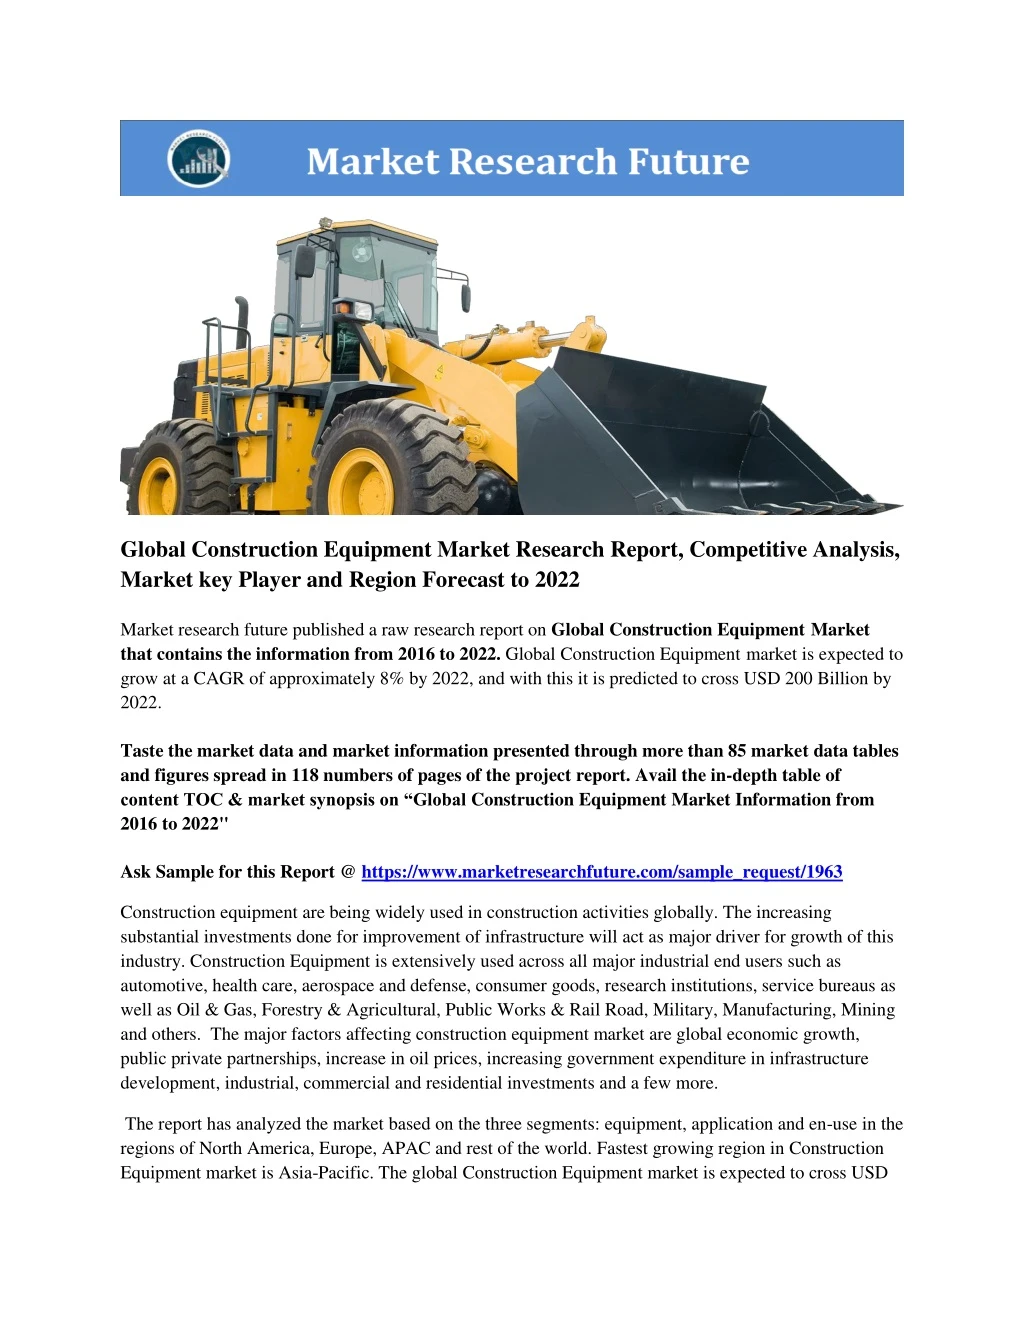 global construction equipment market research